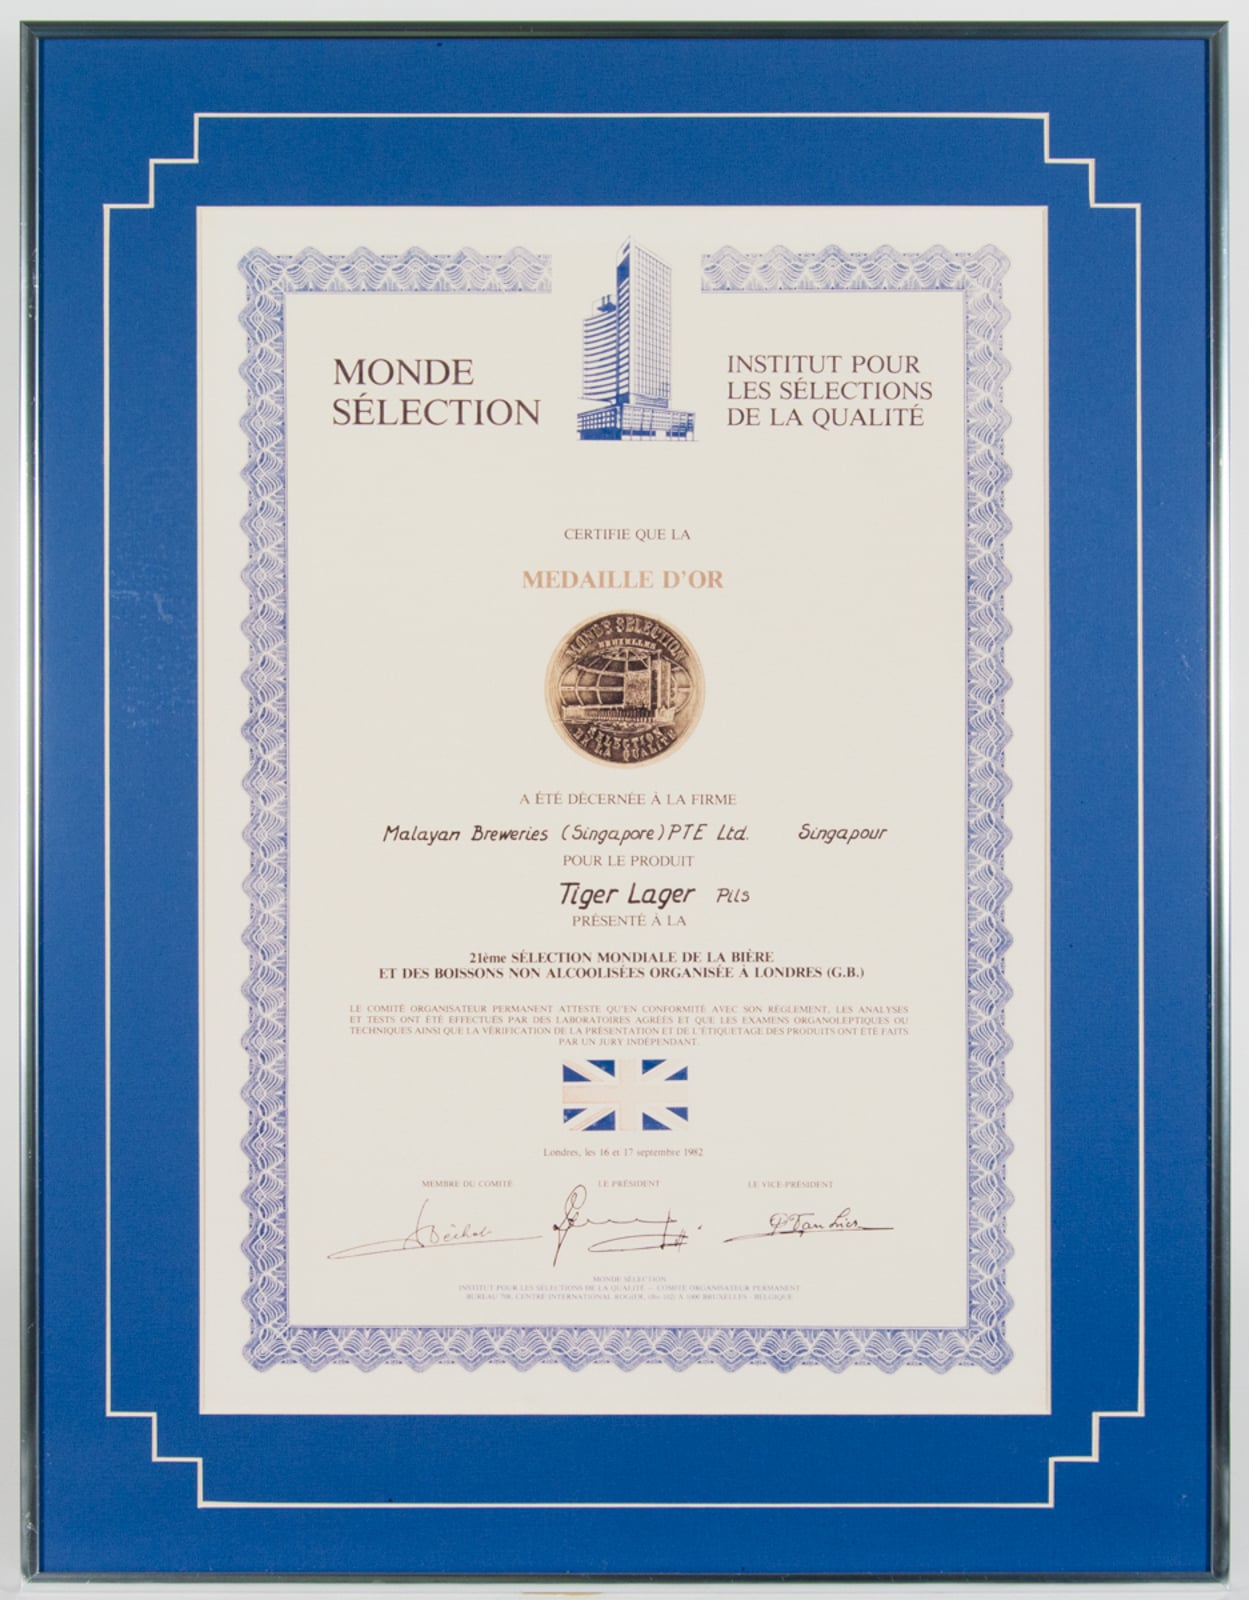 Tiger Lager Pils Médaille d'Or, Monde Selection Certificate 1982